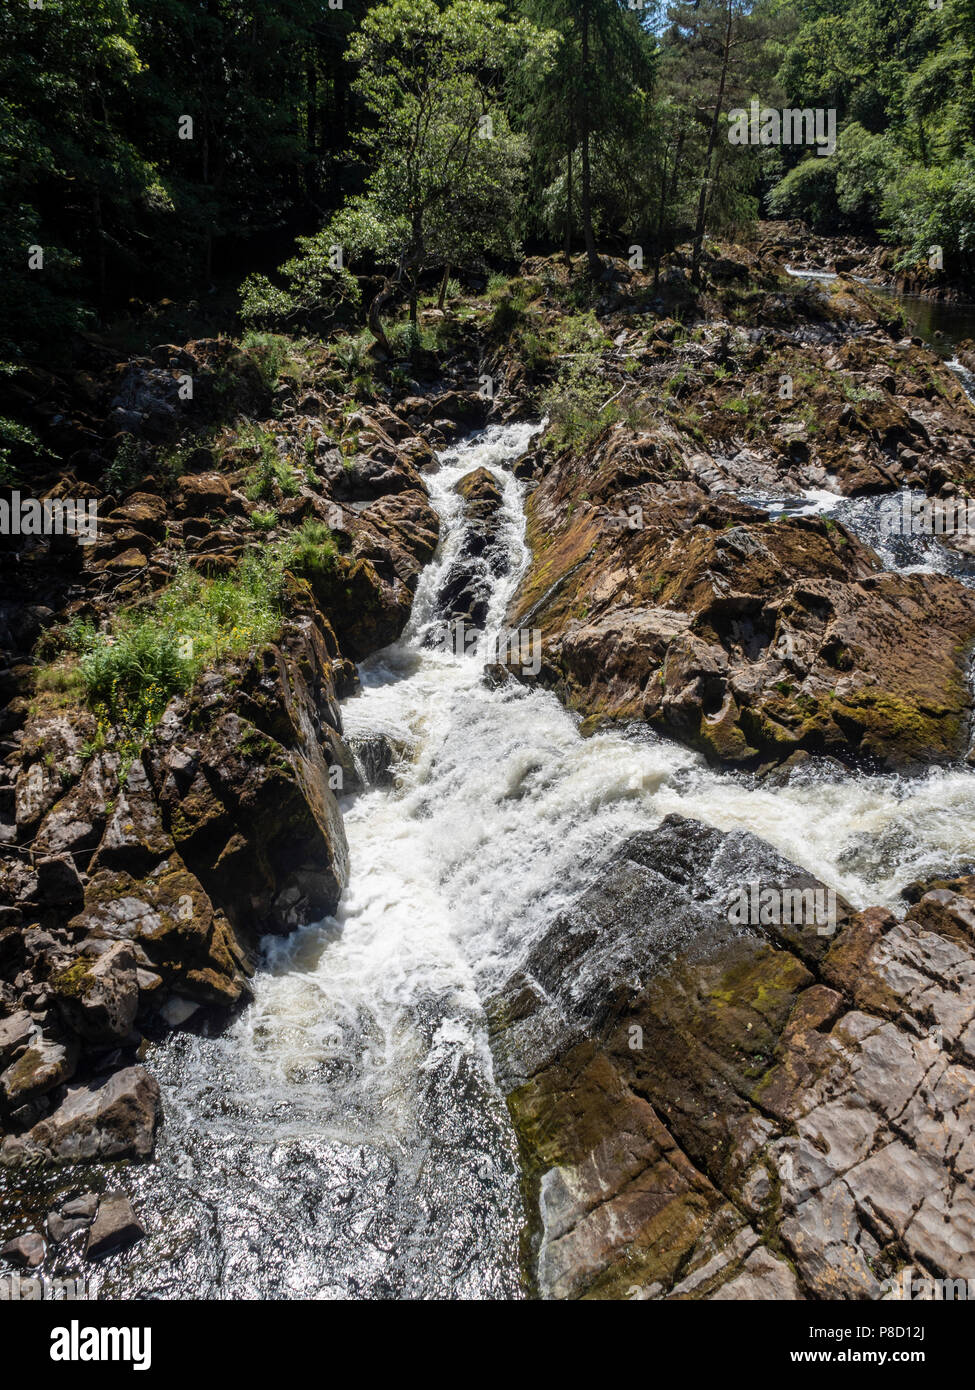 Royal Deeside, Aberdeenshire, Scotland - the Falls of Feugh. Stock Photo